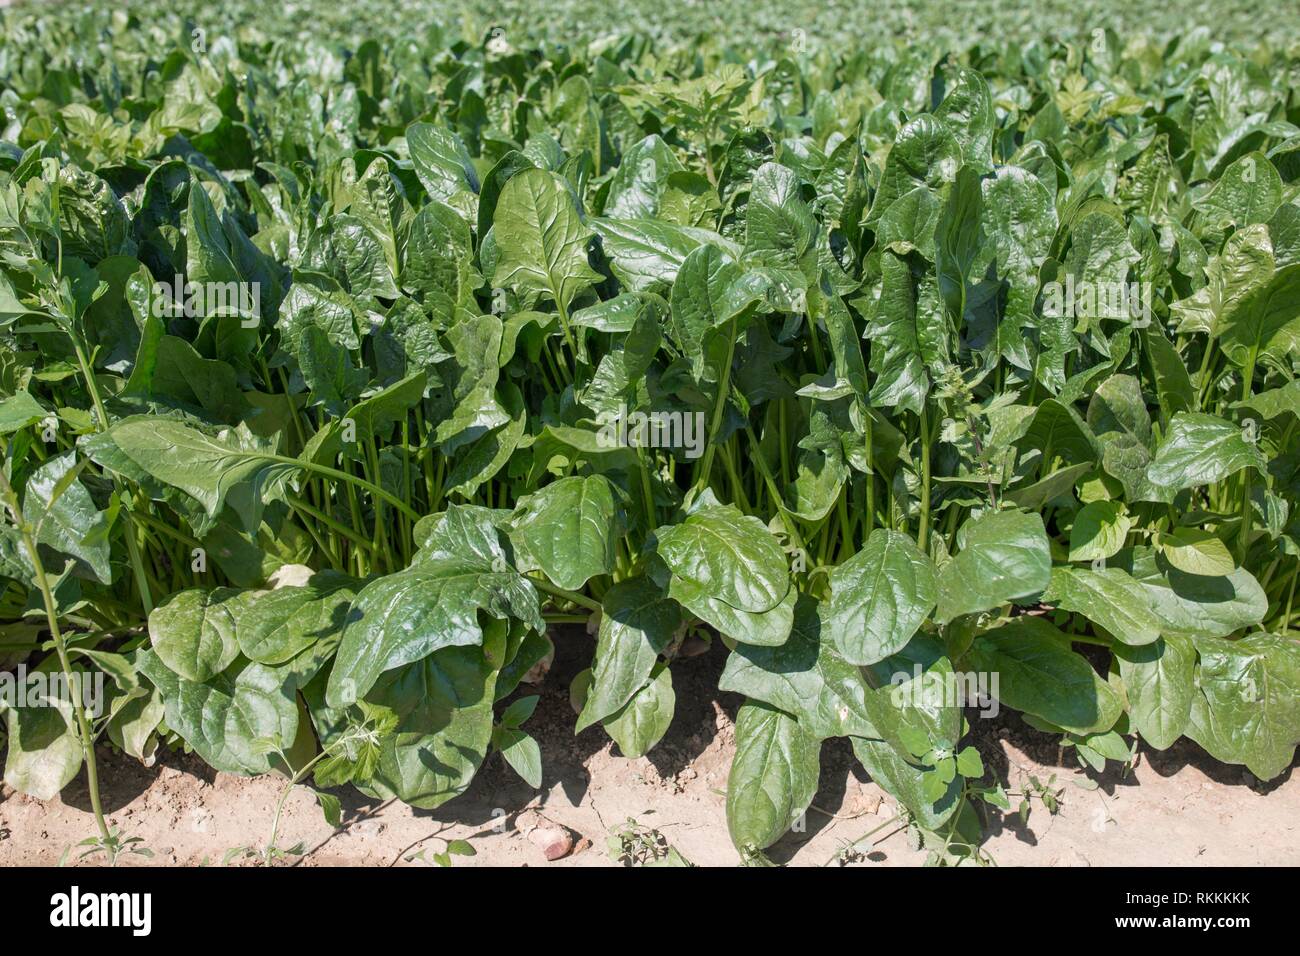 Spinachs surcos a nivel local GRANJA granja ecológica. La agricultura sostenible. Foto de stock